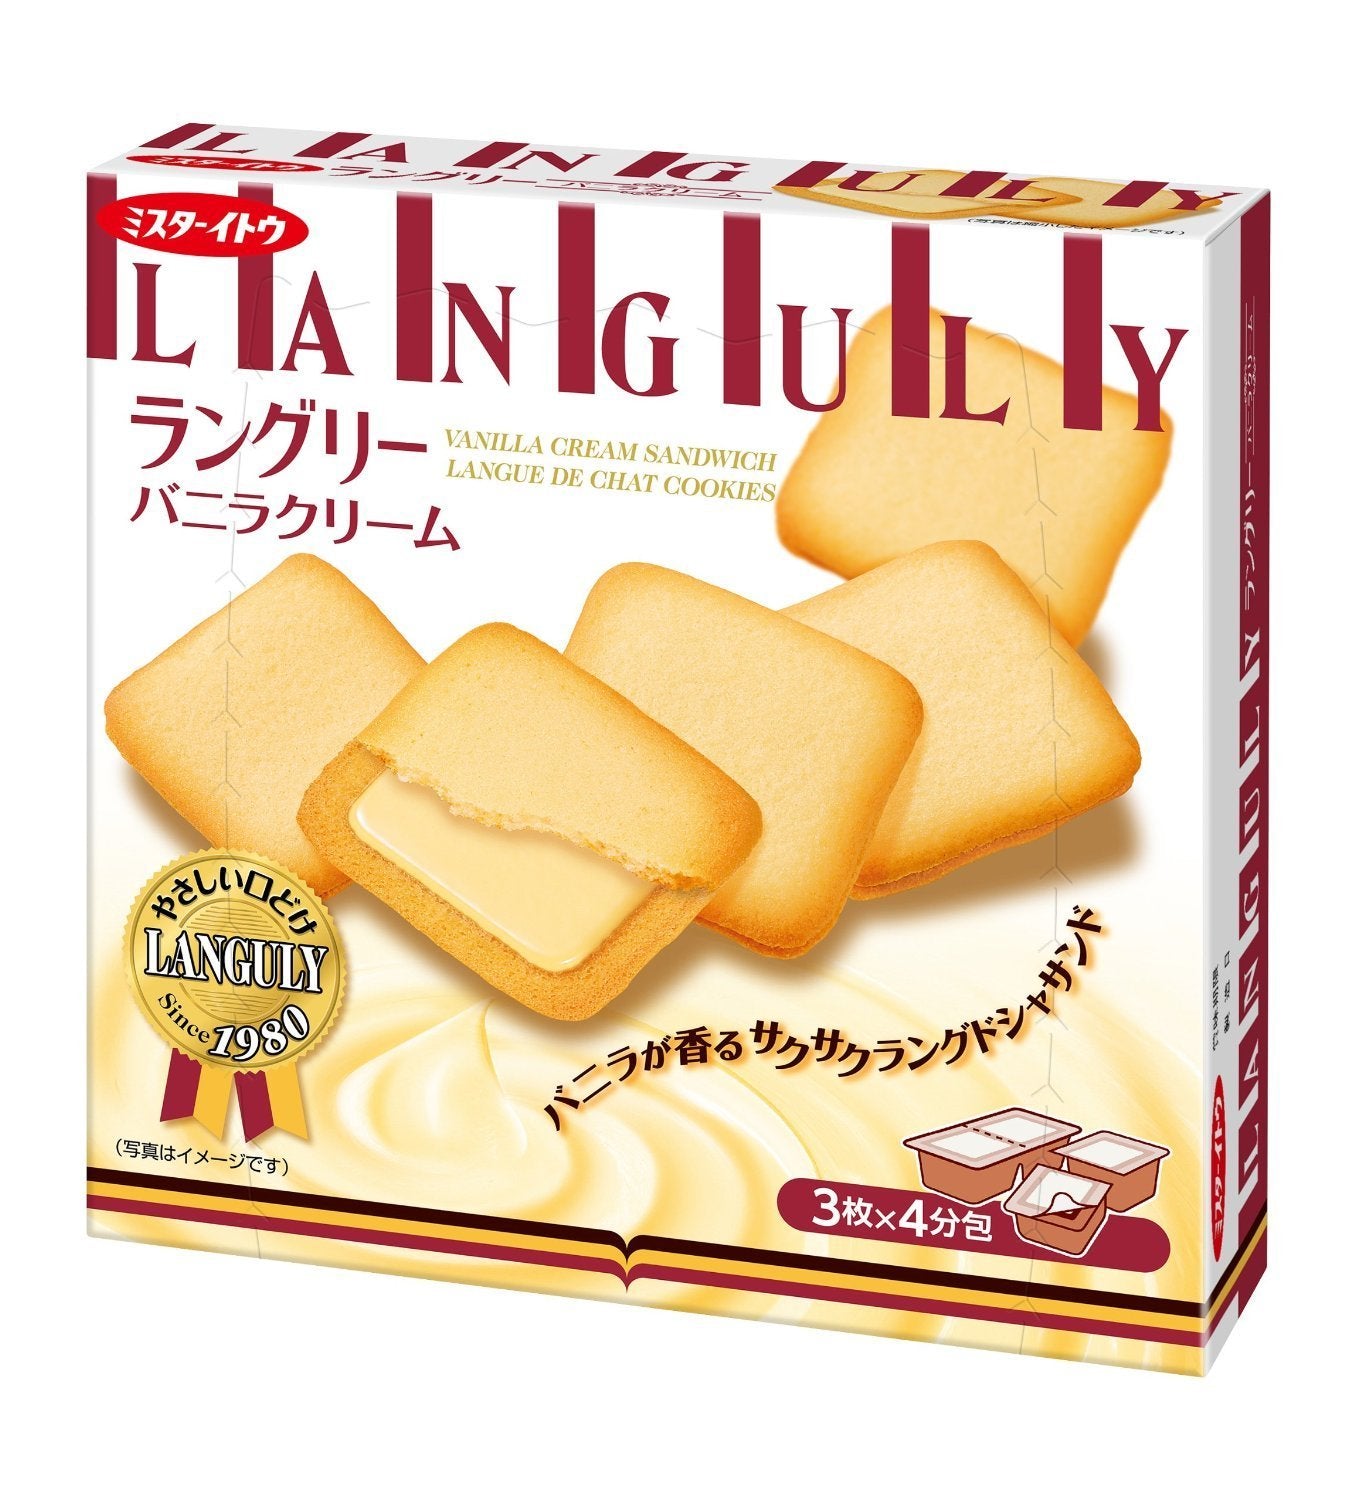 Ito Strawberry Cream Cookies Season Limited 12pcs (Japanese Import)